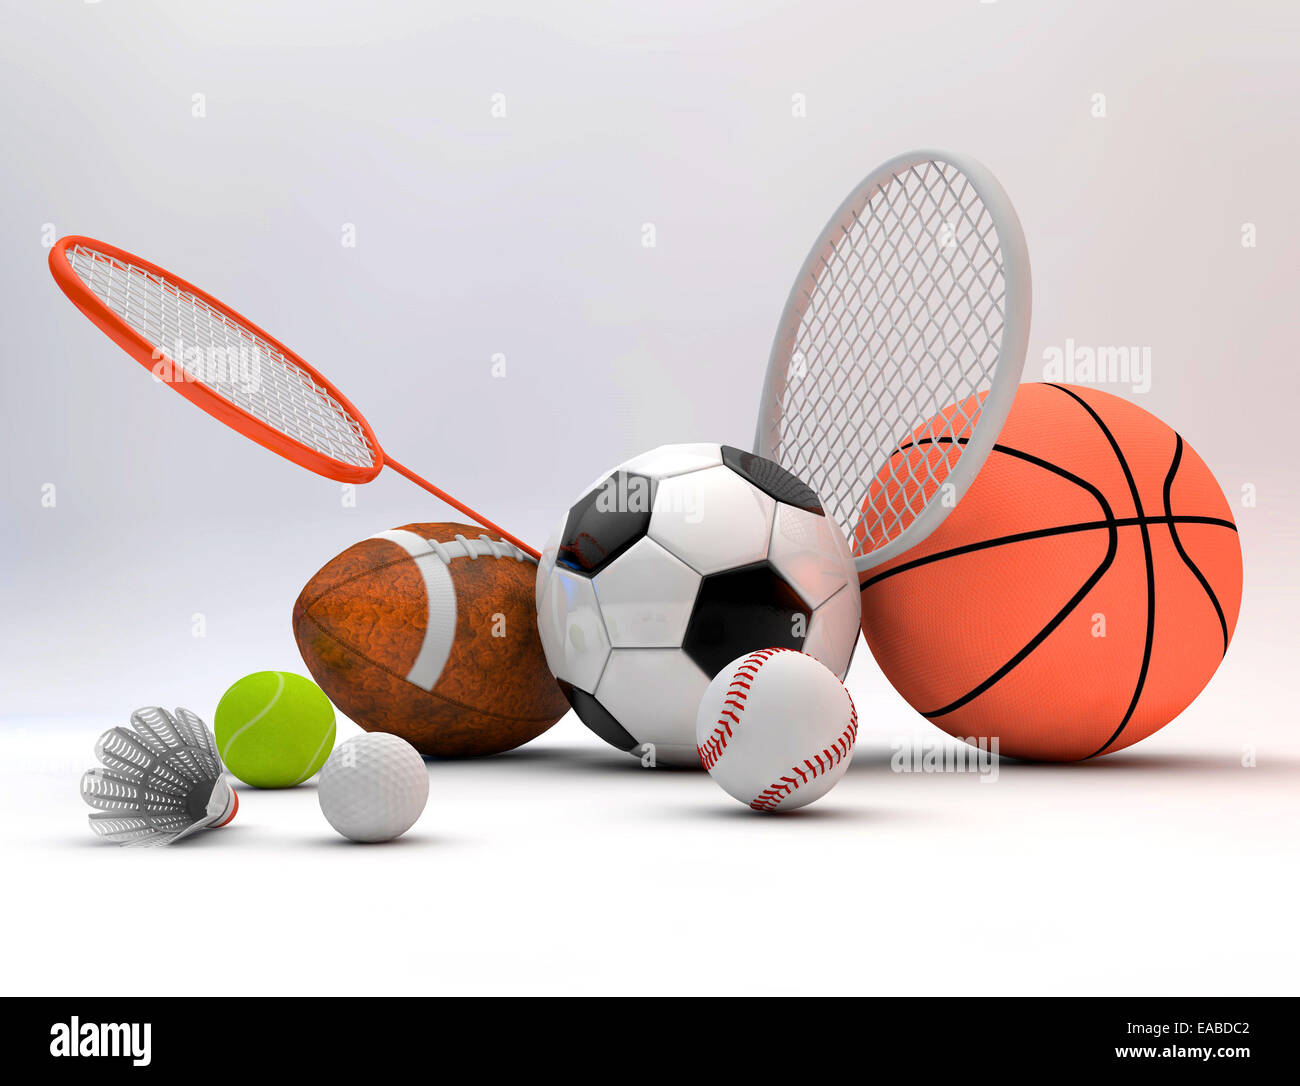 Verschiedene Sportgeräte wie Basketball, Fußball, Tennisball, Baseball,  Tennisschläger, Fußball, Birdie, badminton Stockfotografie - Alamy